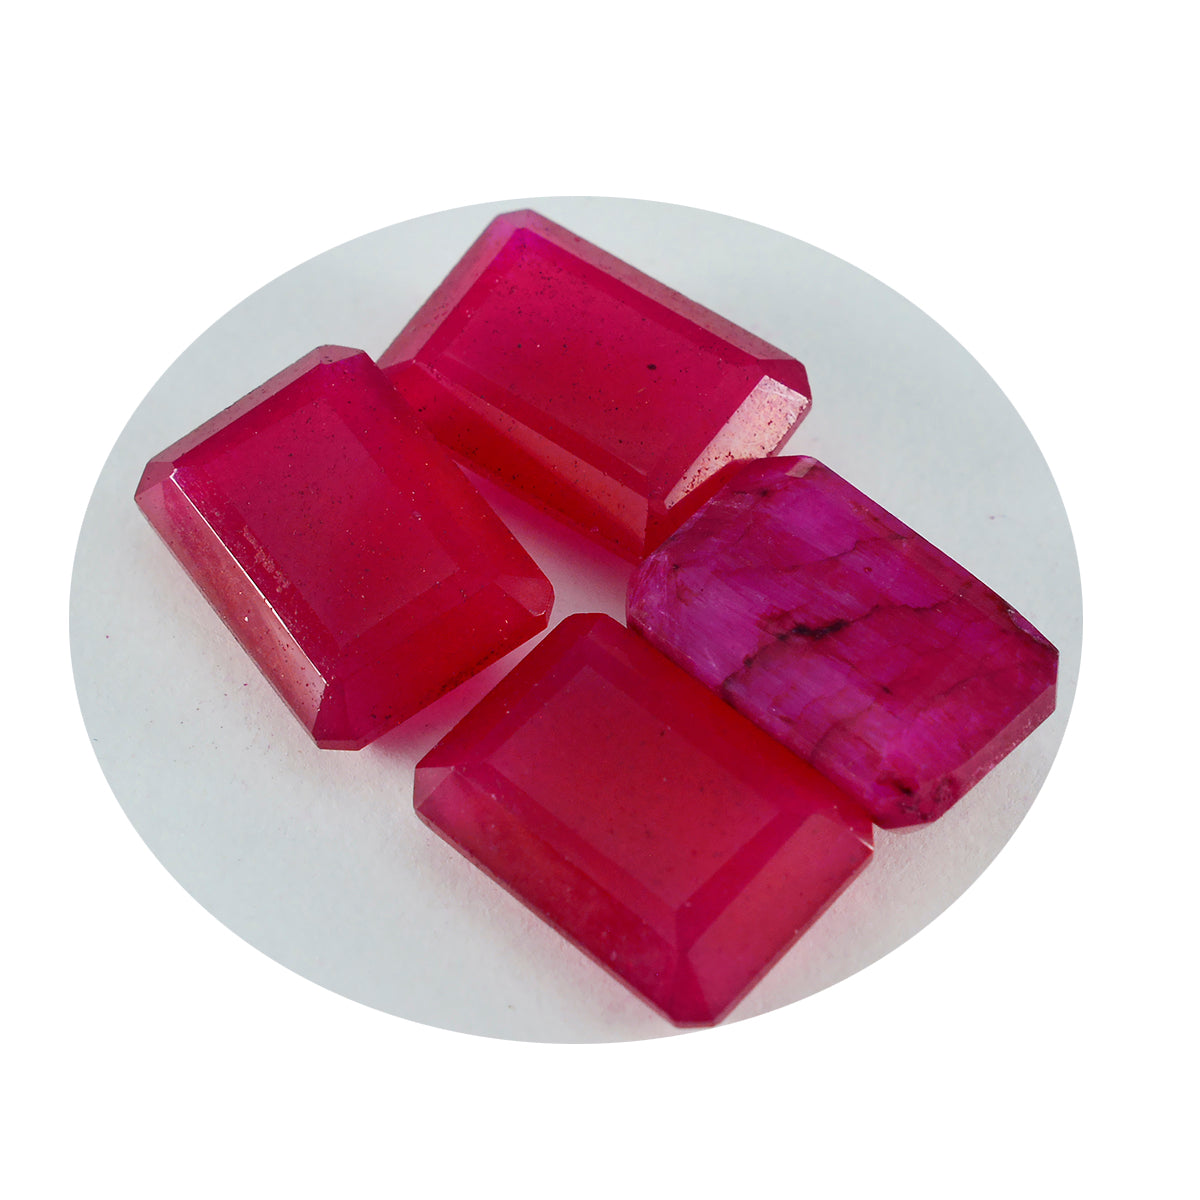 Riyogems 1PC echte rode jaspis gefacetteerd 12x16 mm achthoekige vorm, mooie kwaliteitsedelsteen